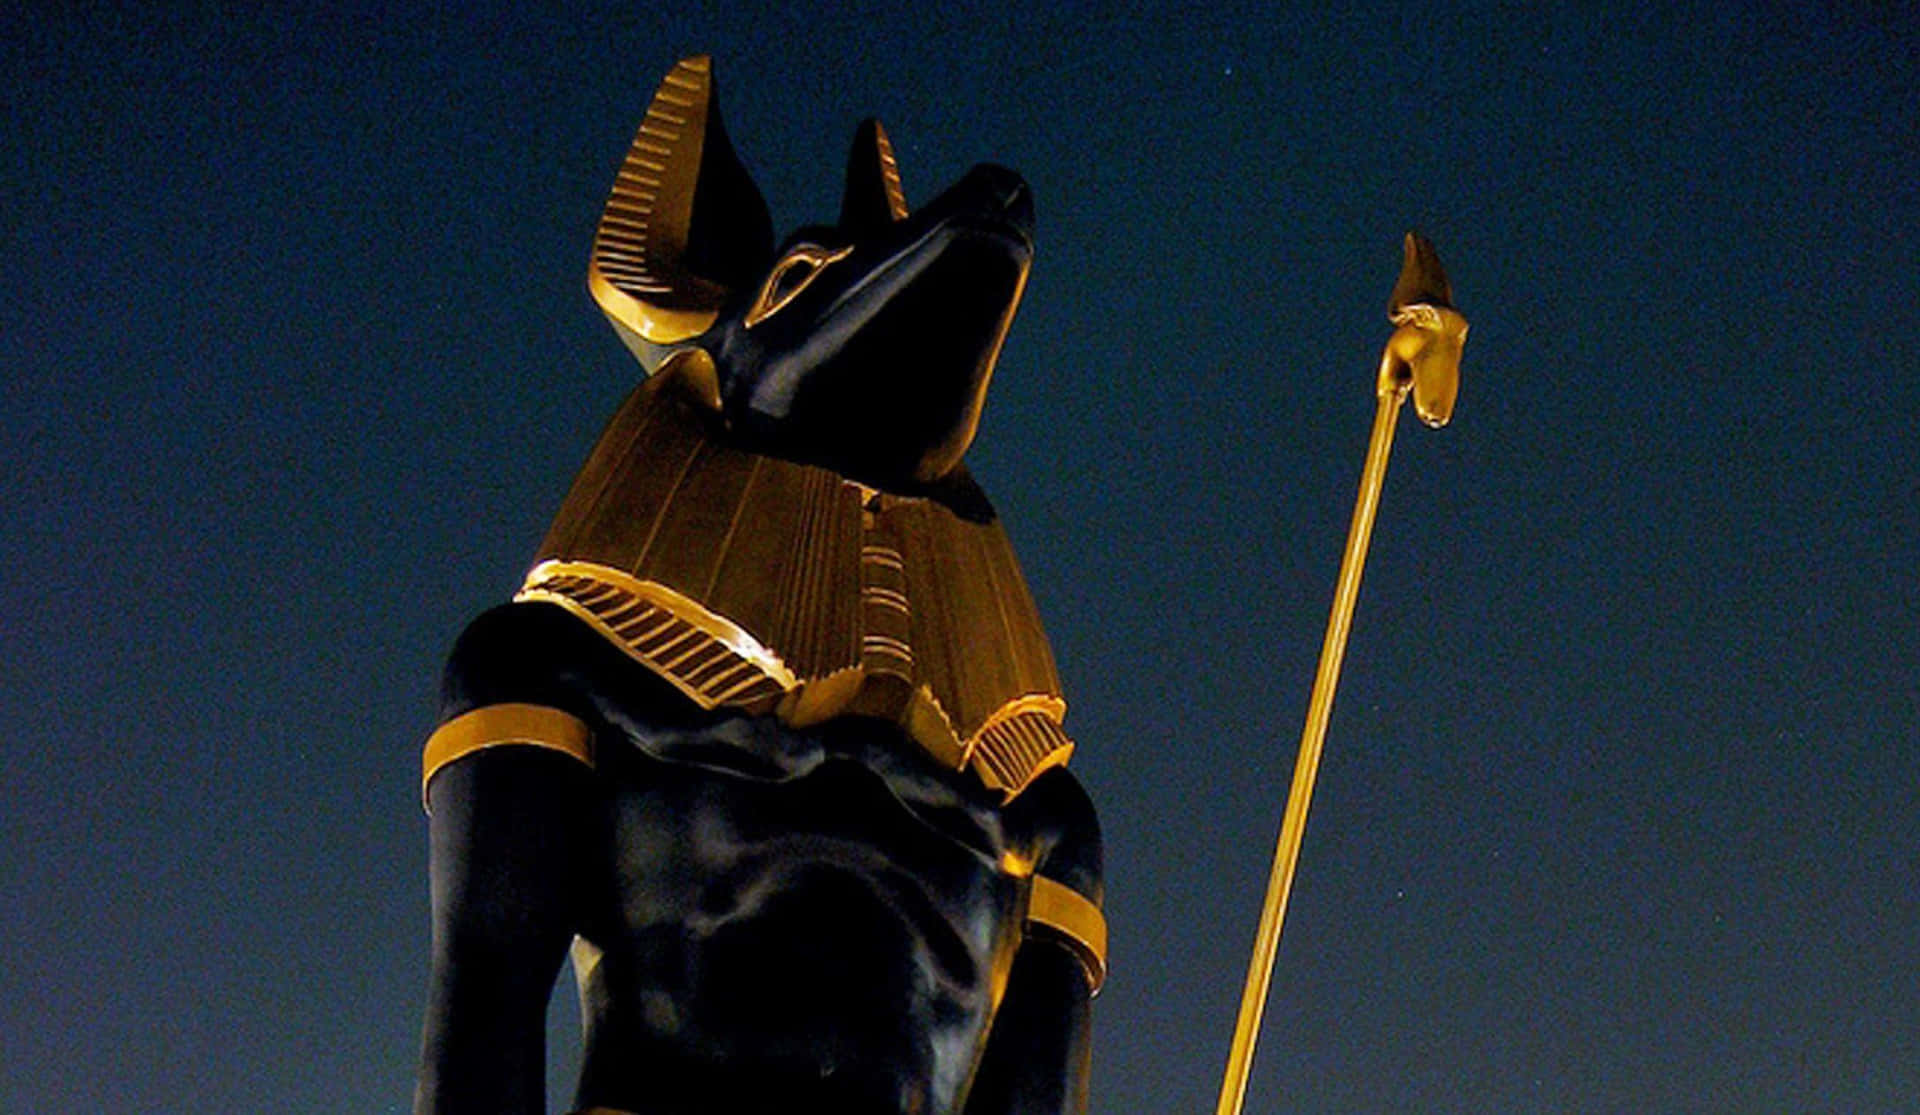 Statuadi Una Divinità Egiziana